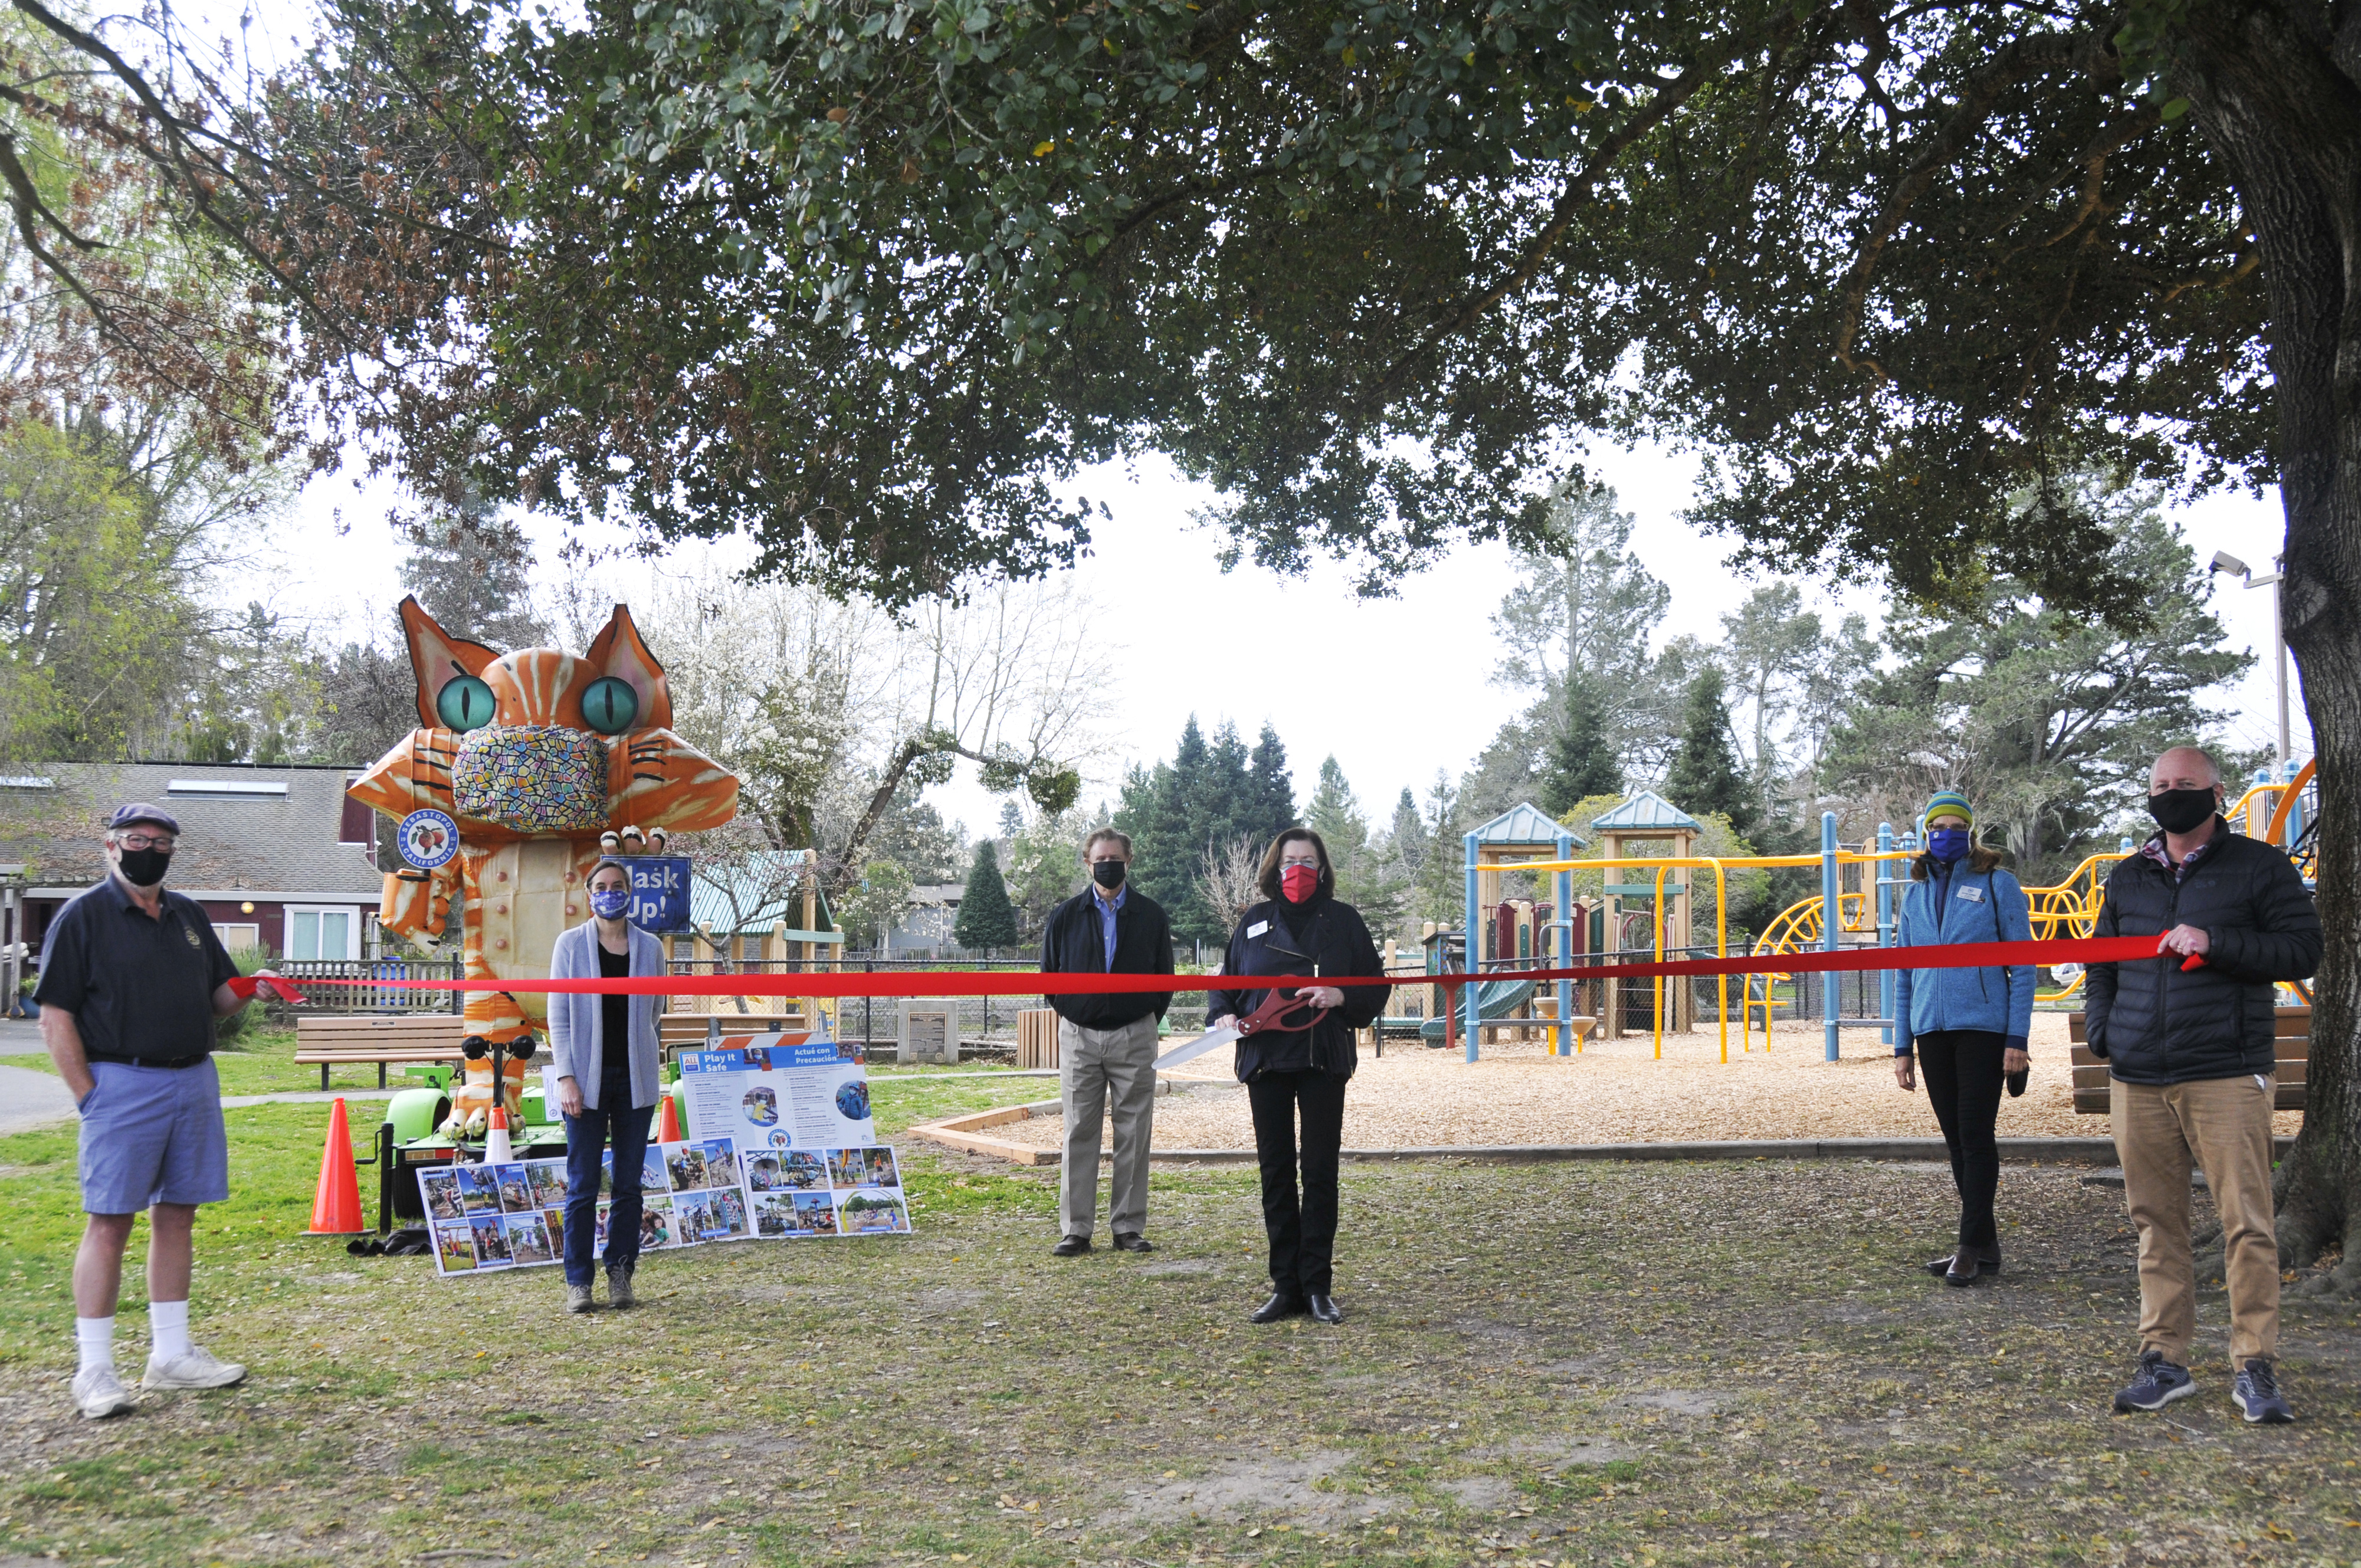 3/11: Sebastopol Celebrates Re-Opening of Libby Playground with 